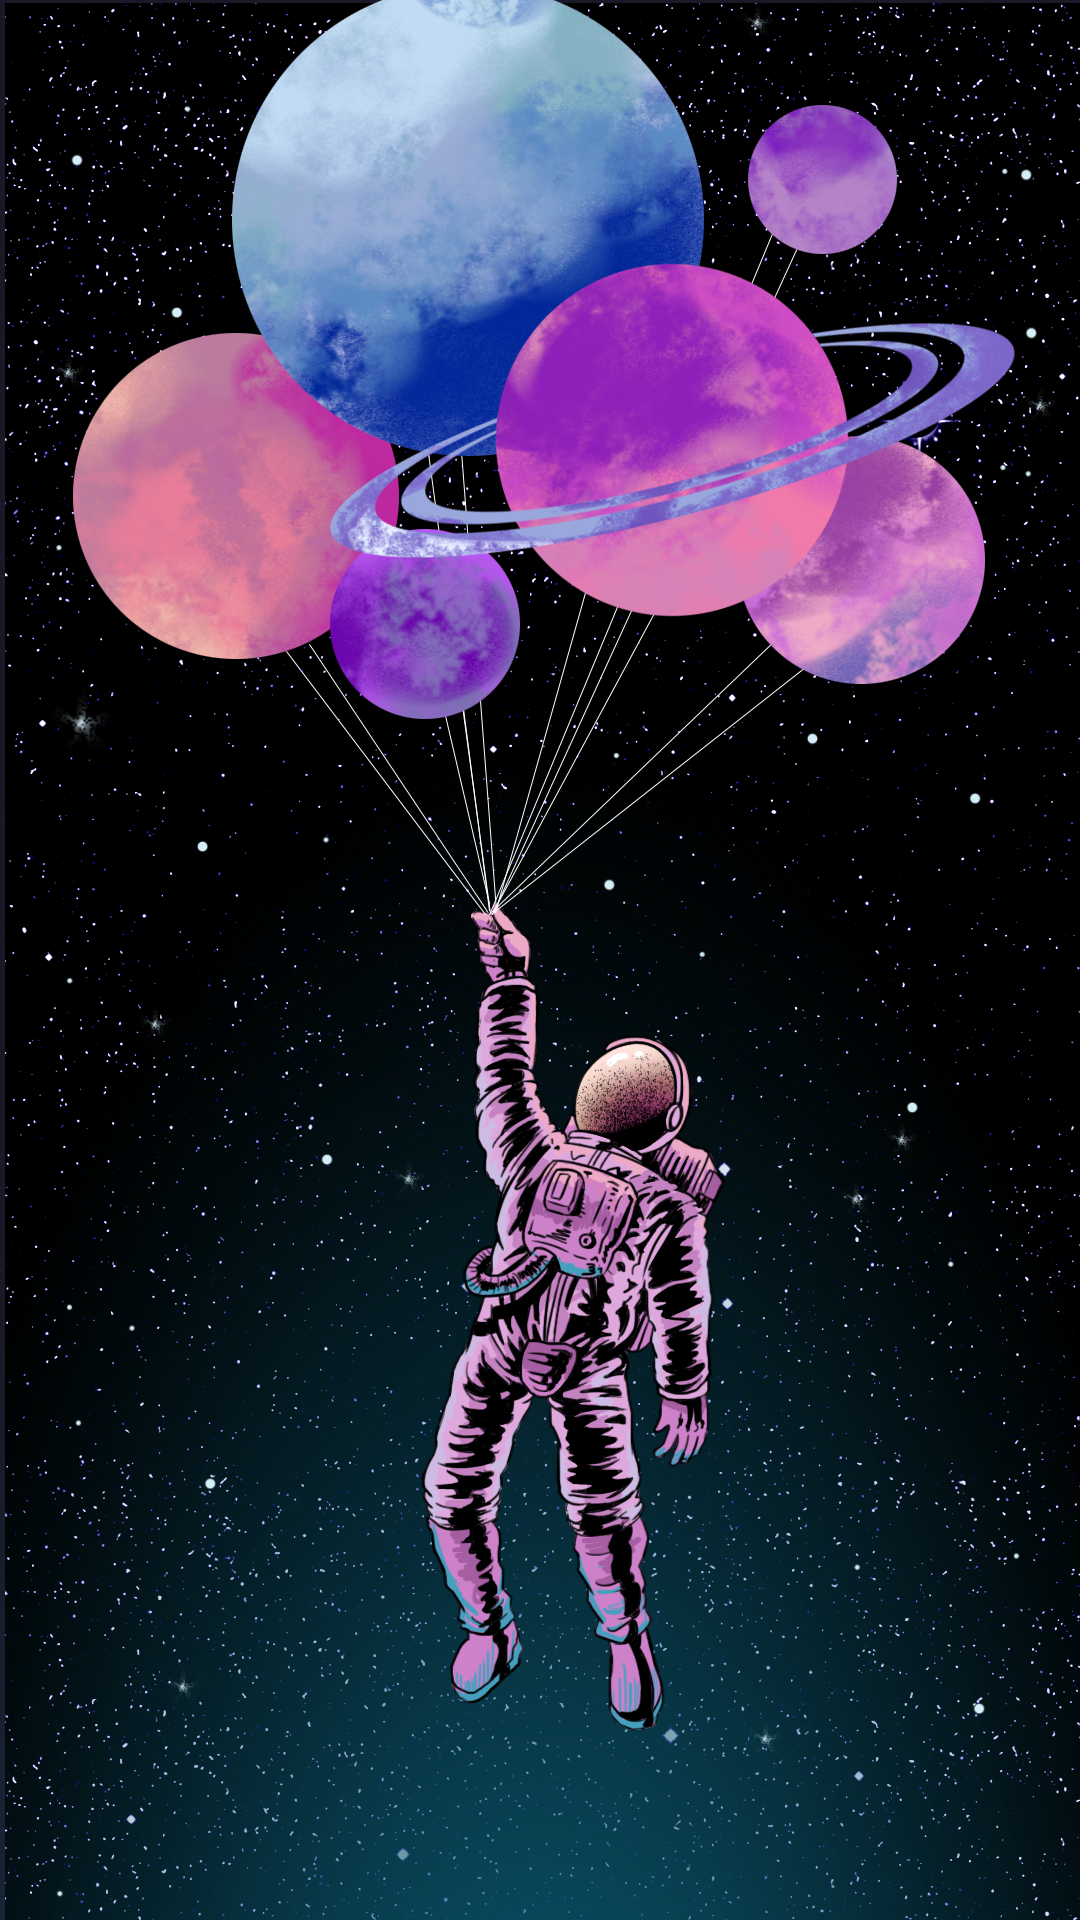 Balloon, Pink, Illustration, Graphic design, Sky, Organism. Wallpaper space, Astronaut wallpaper, Planets wallpaper